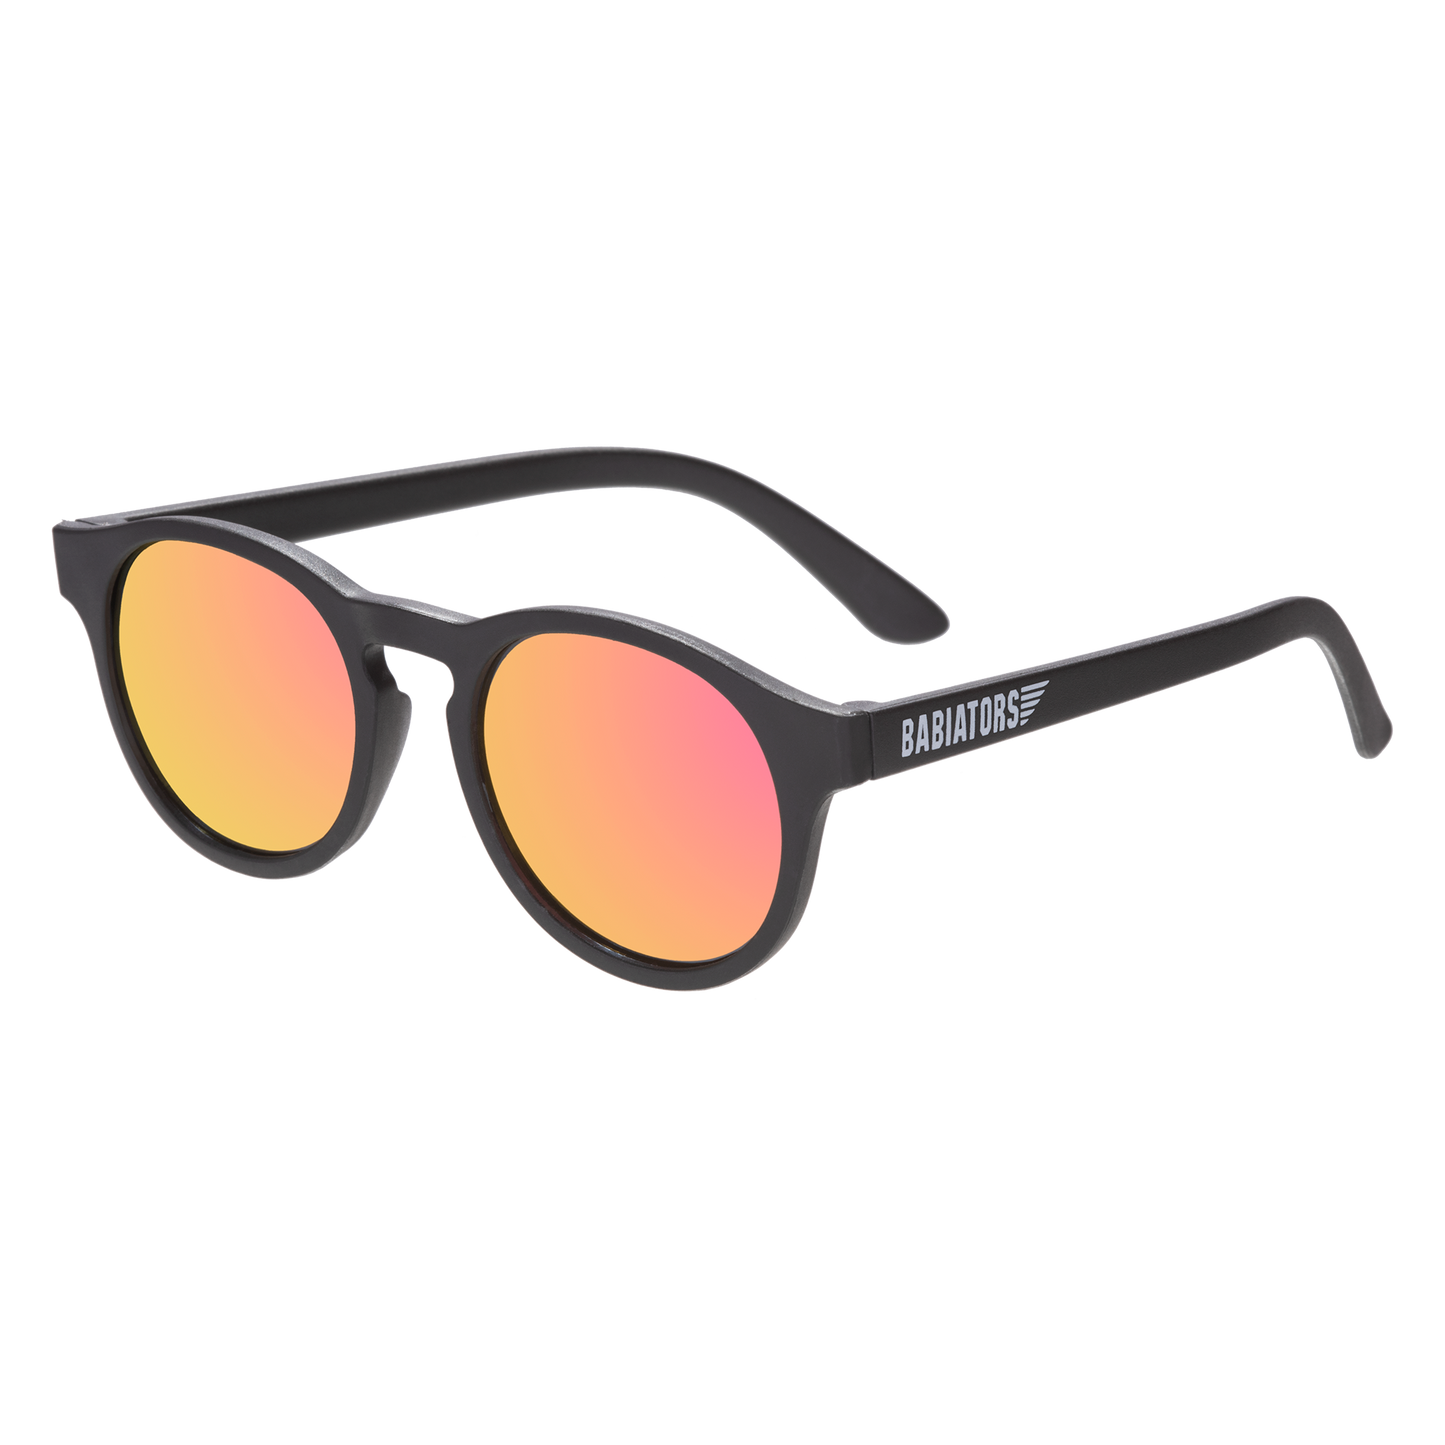 Keyhole non-polarized Sunglasses "The Rockstar"